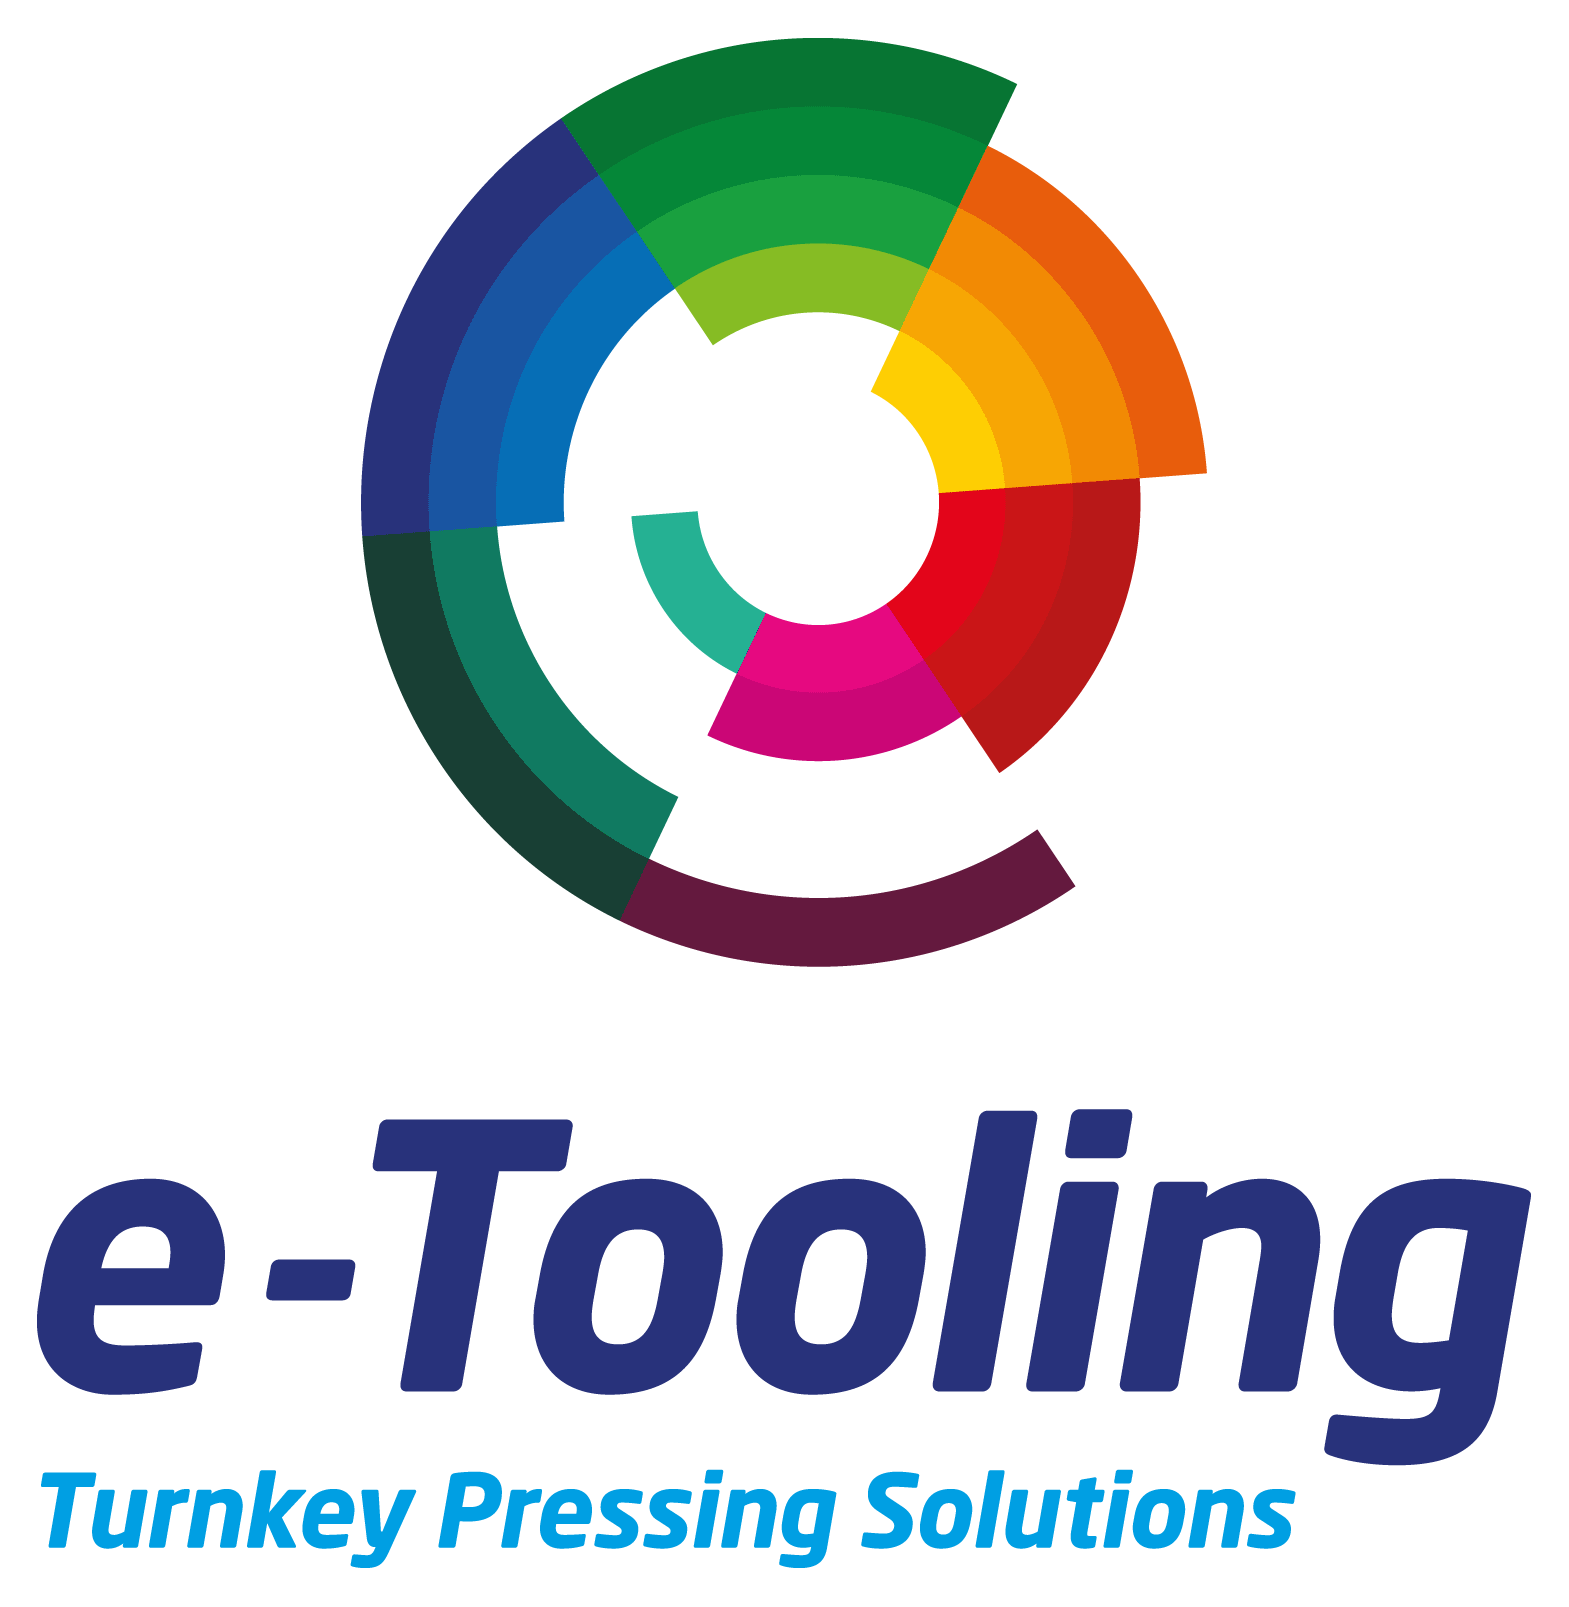 E-Tooling